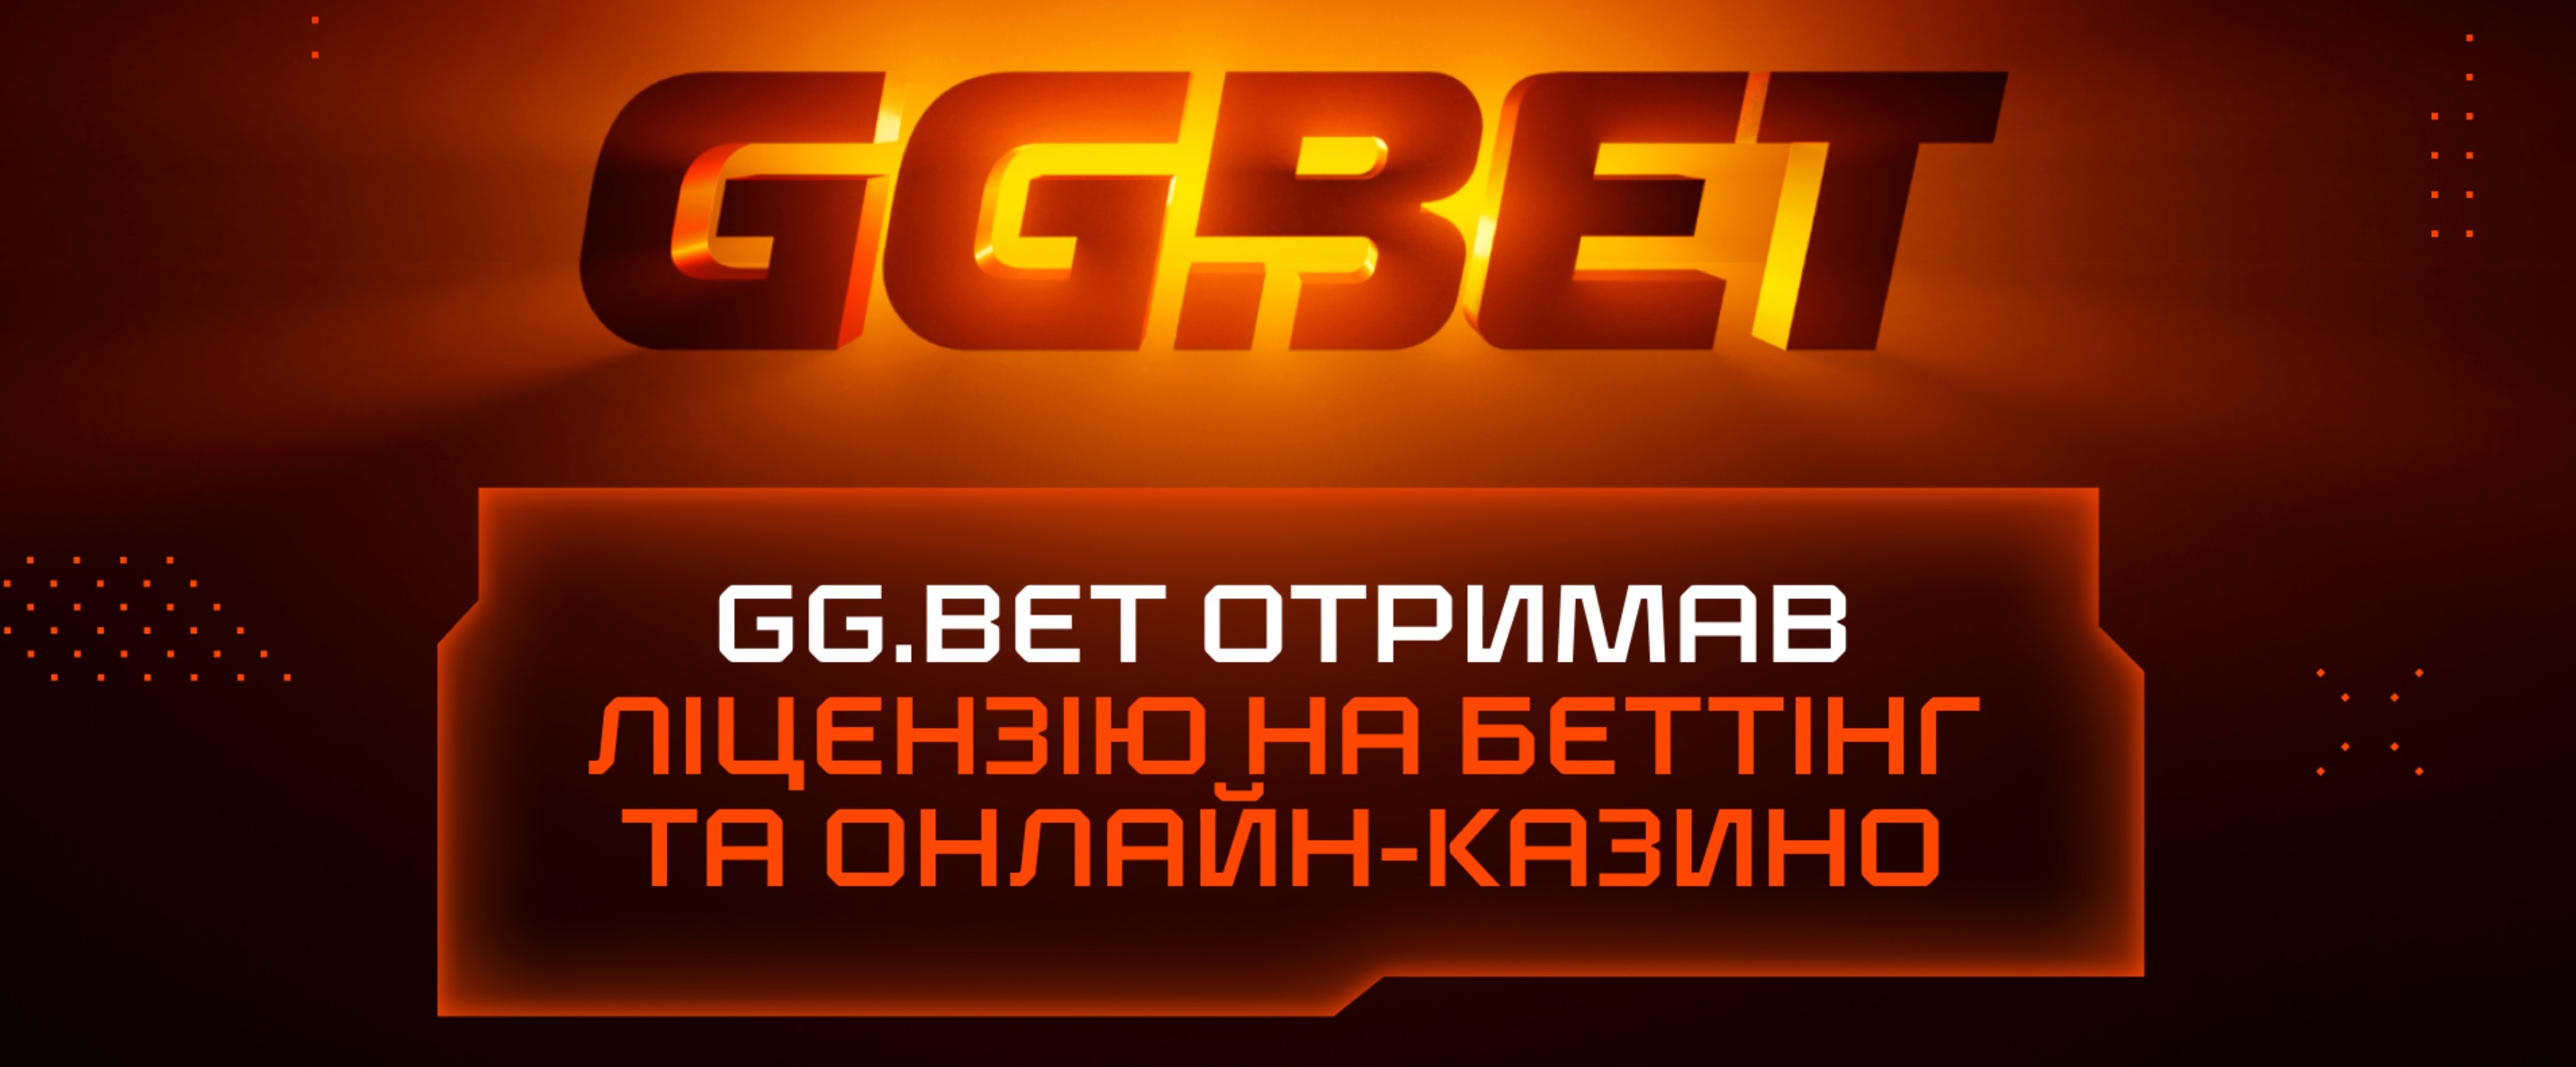 Лицензия онлайн казино GGbet.